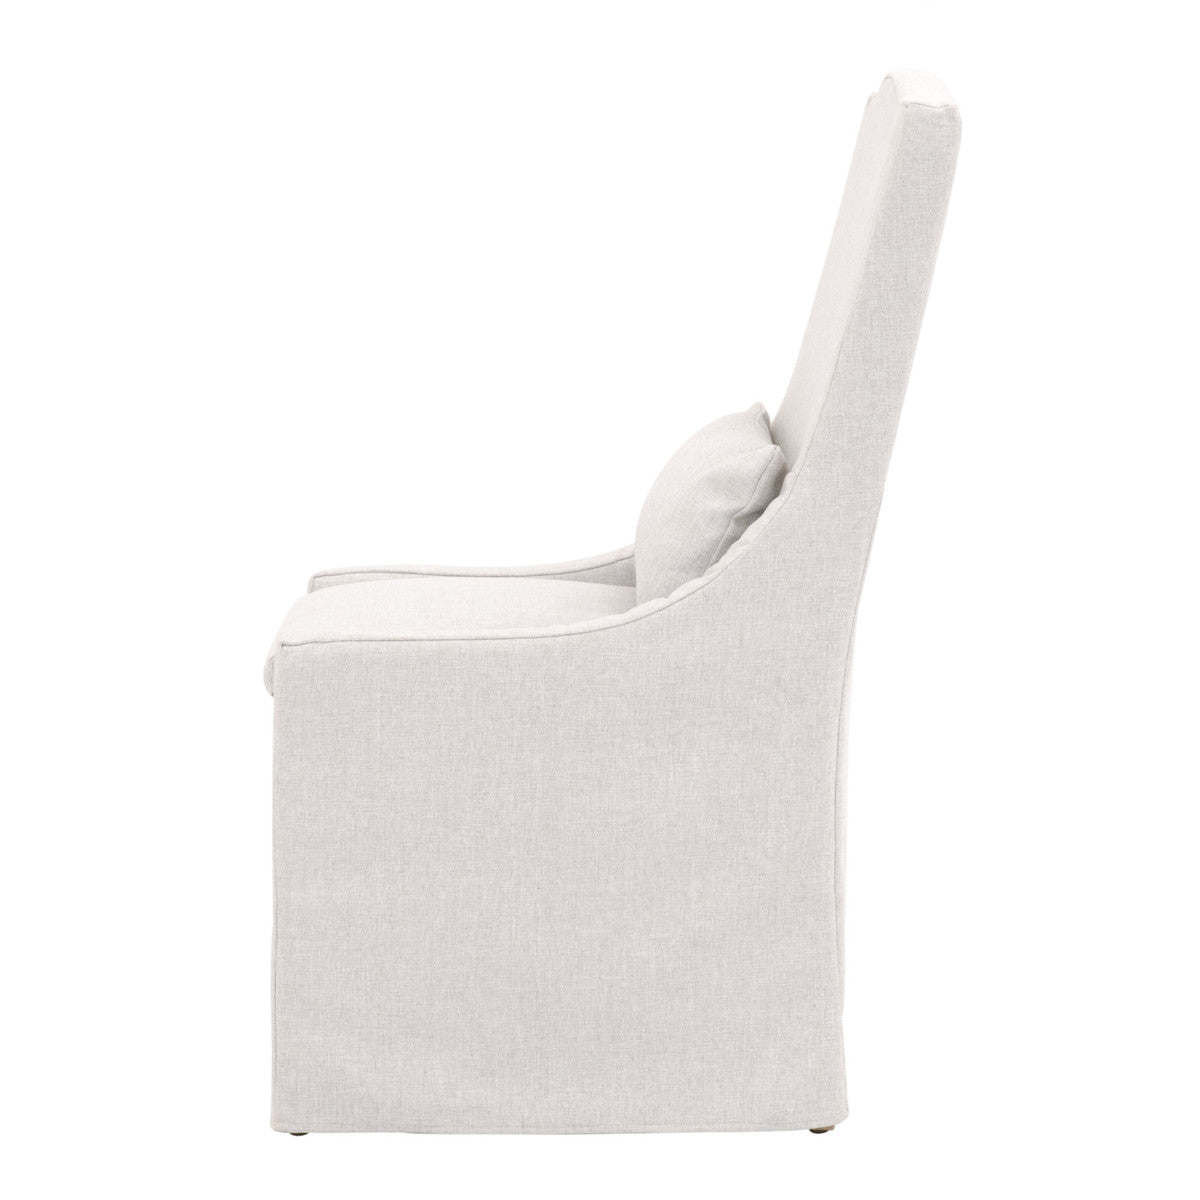 Adele Outdoor Slipcover Dining Chair in Performance Blanca, Gray Teak - 6834.BLA